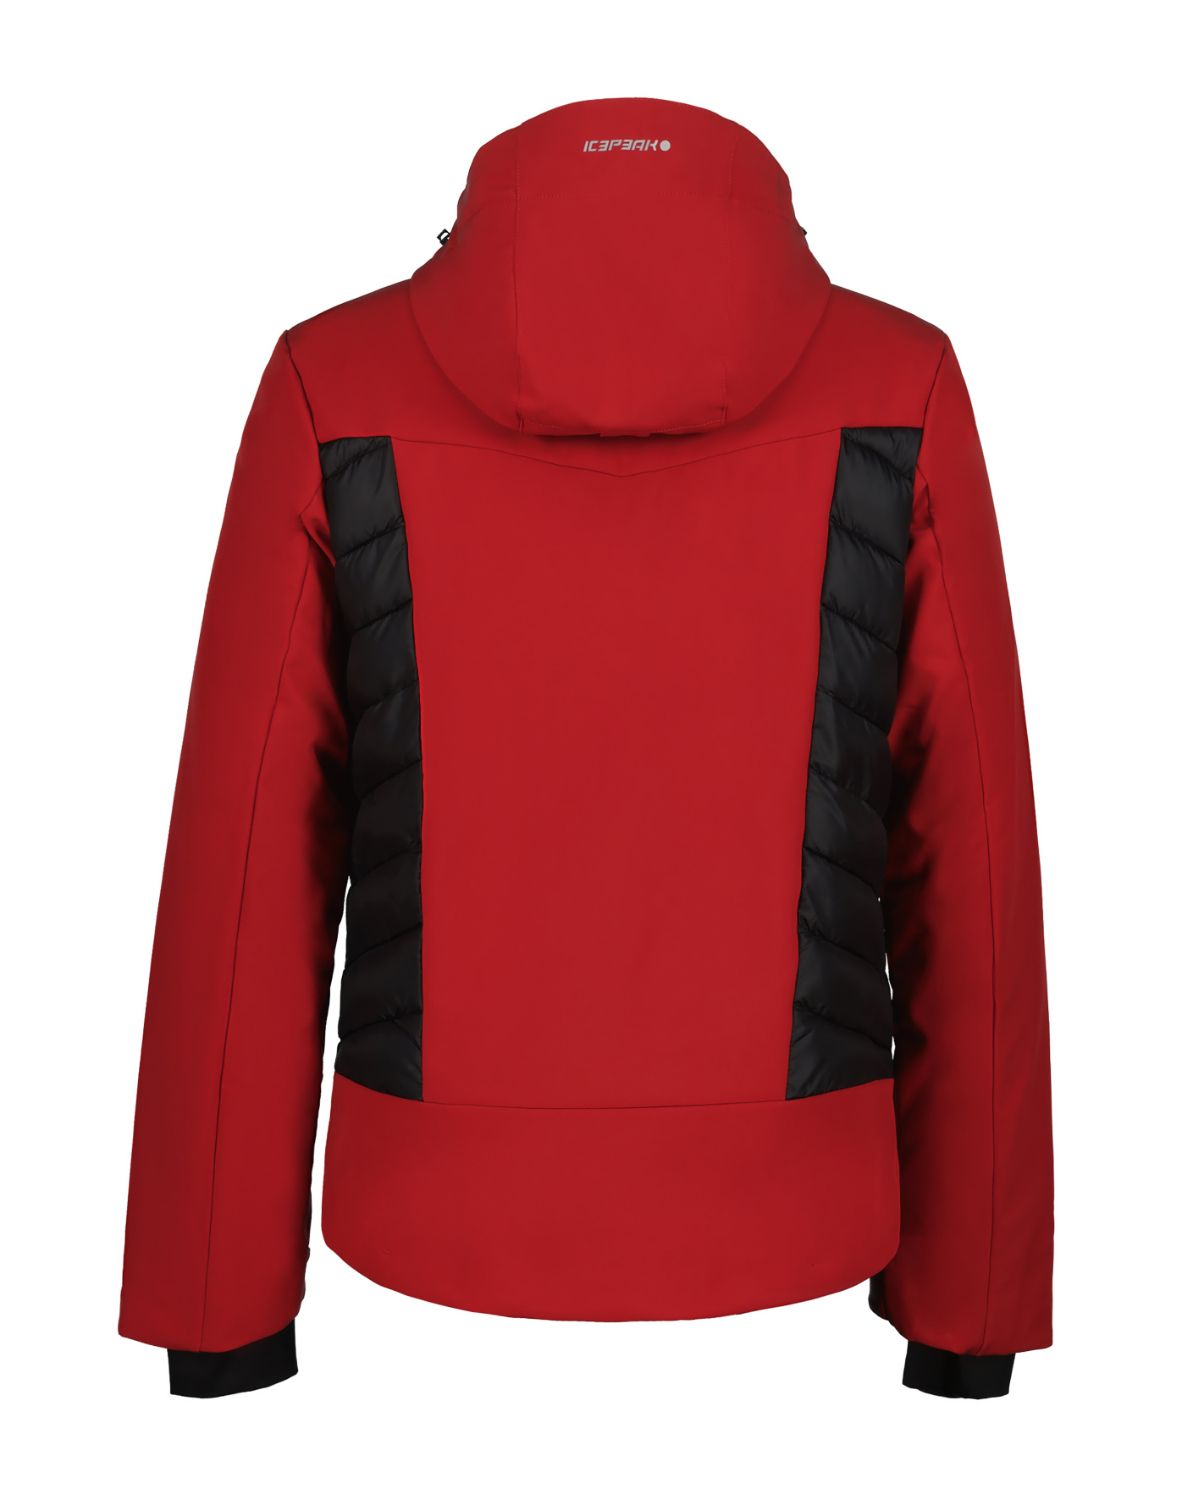 Icepeak FREMONT, moška smučarska jakna, rdeča | Intersport